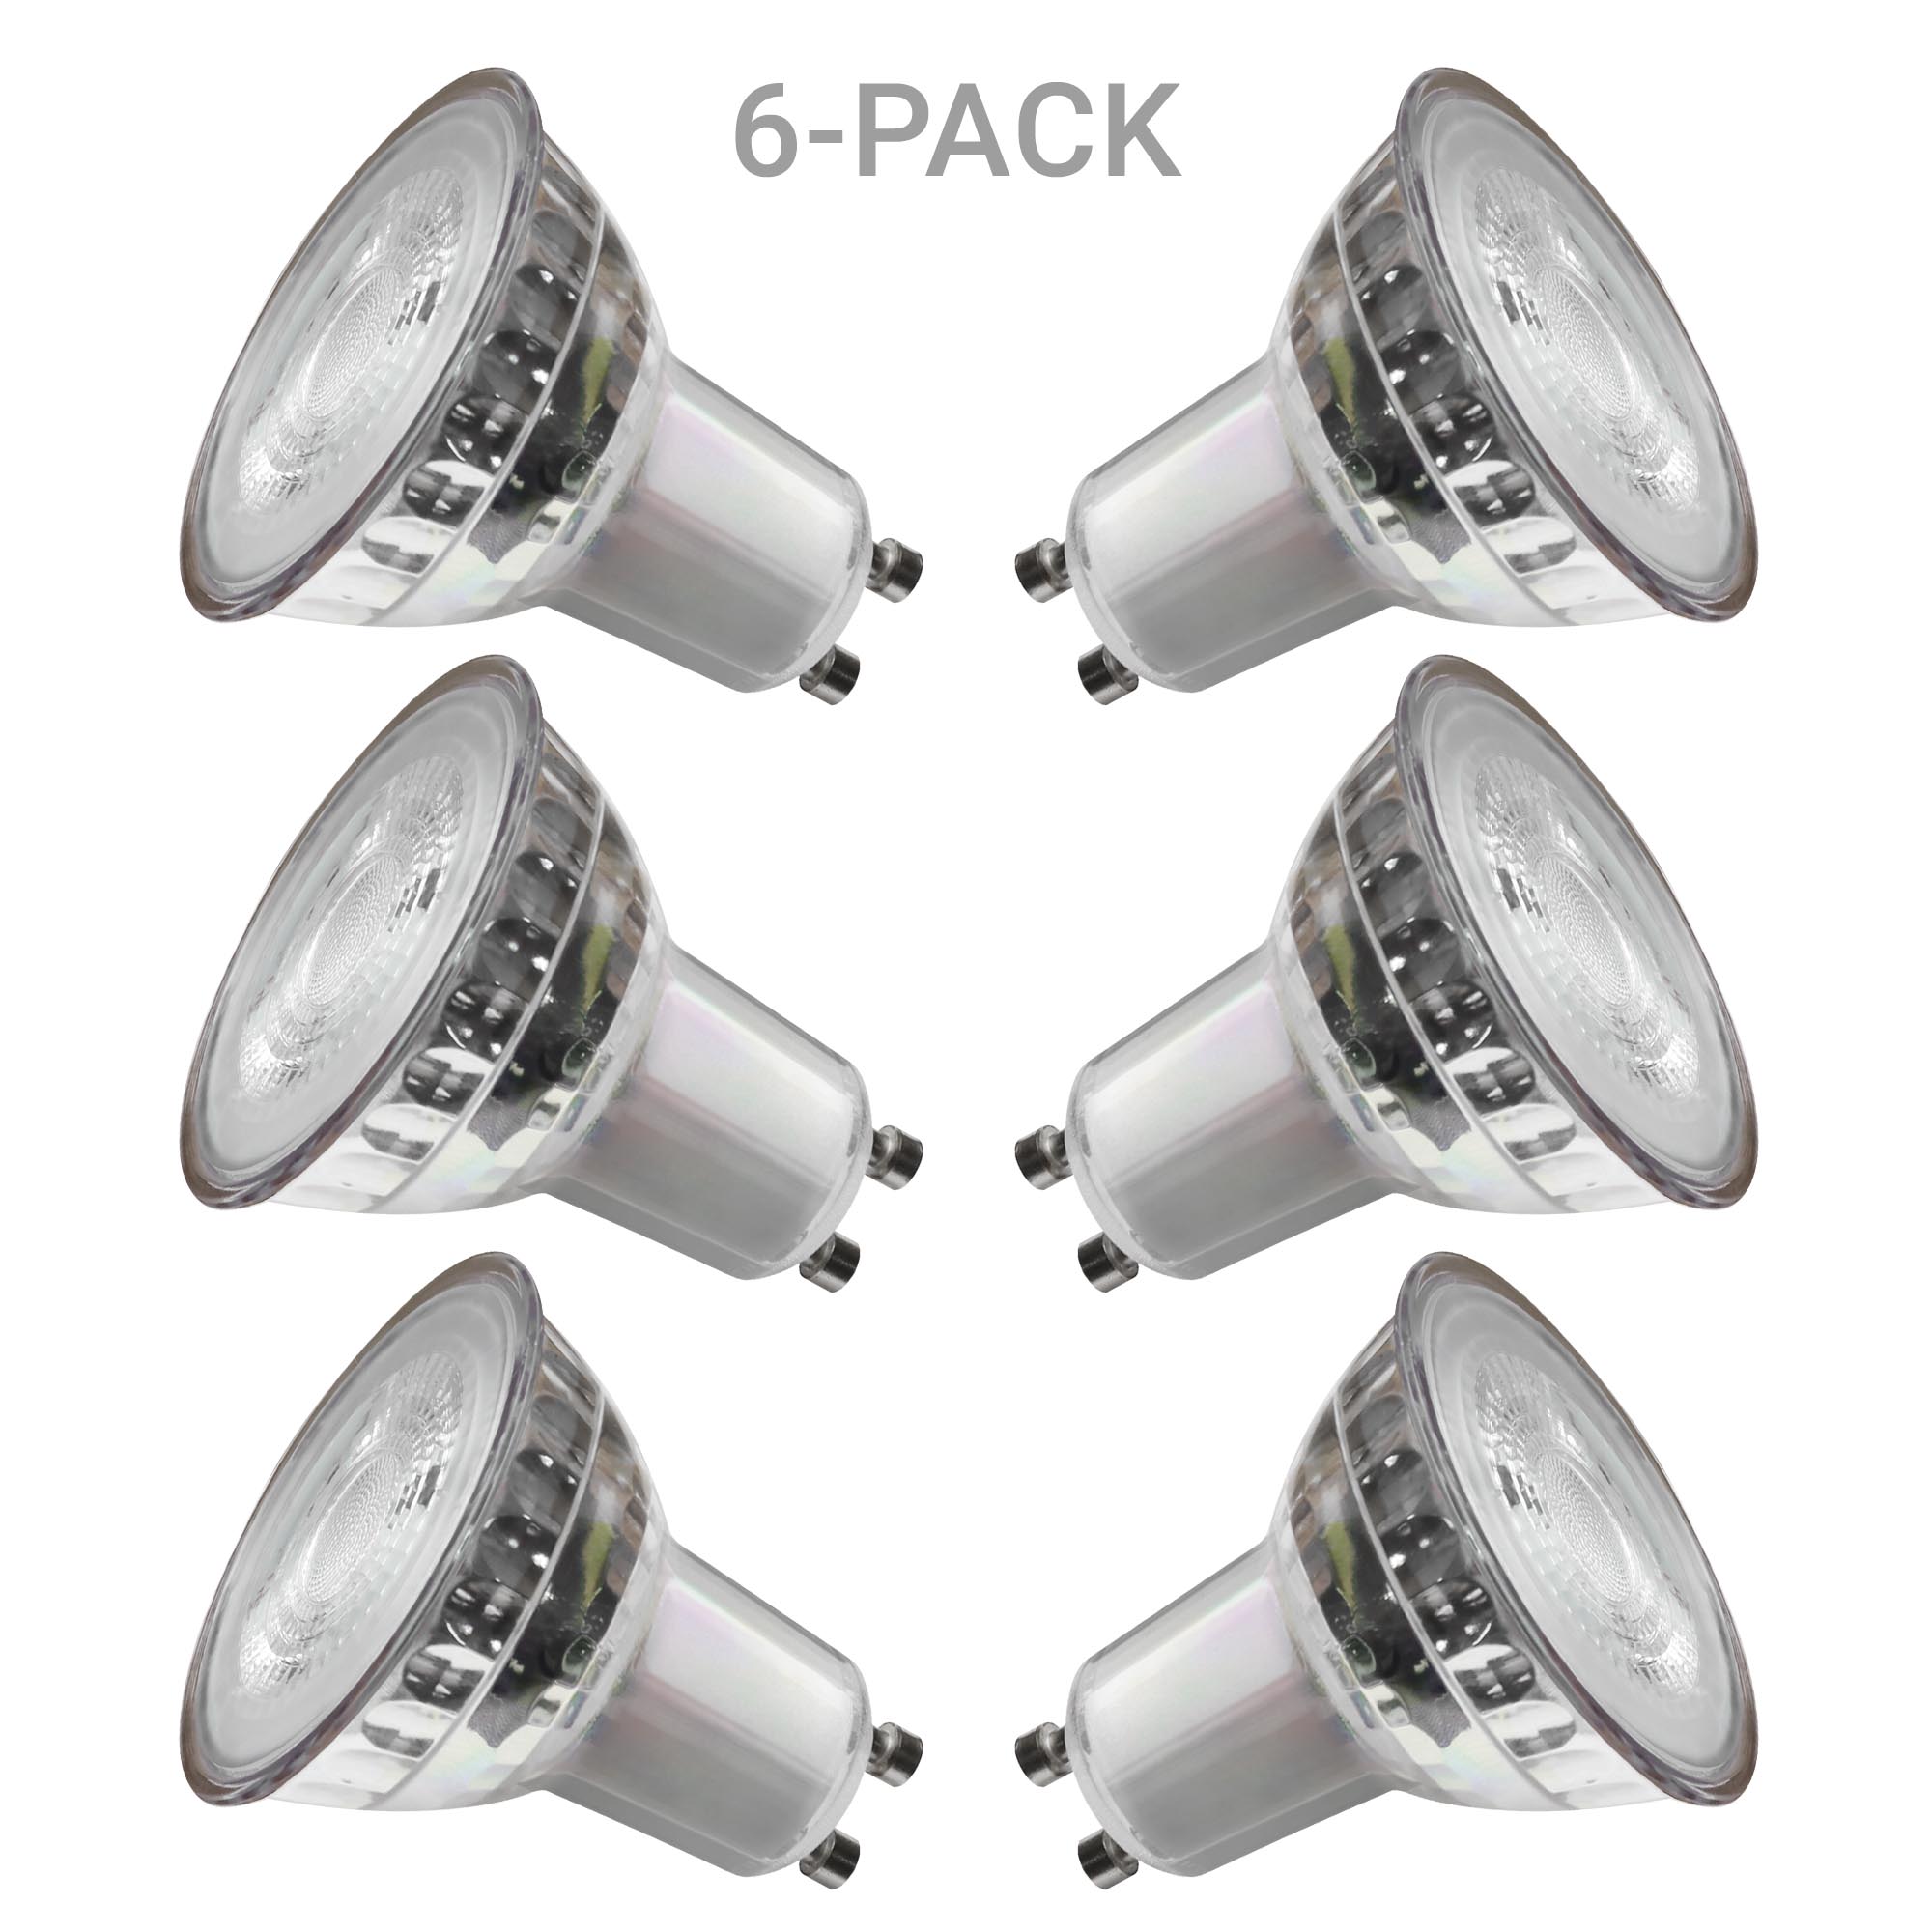 6-pack GU10 LED